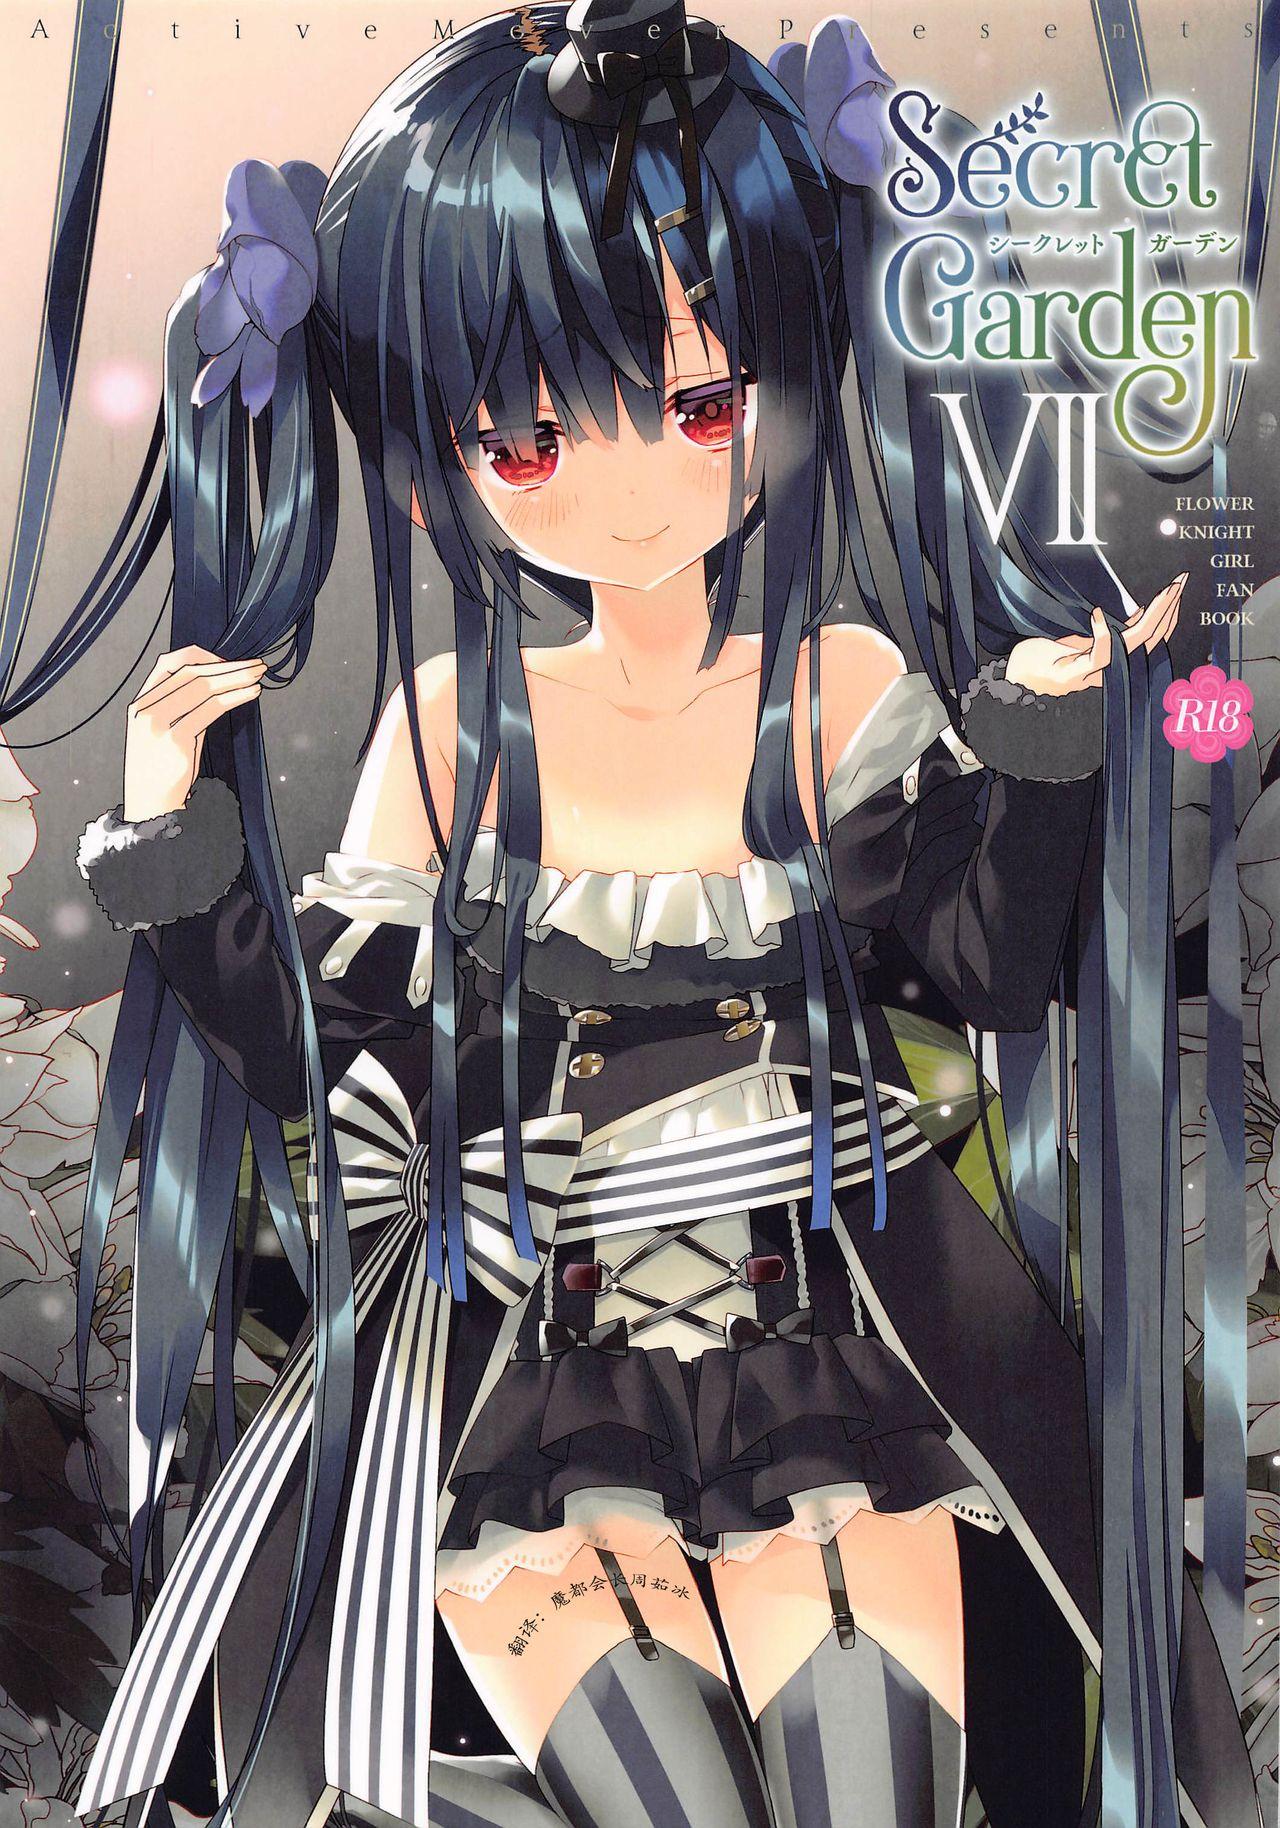 Insertion Secret Garden VII - Flower knight girl Longhair - Page 1